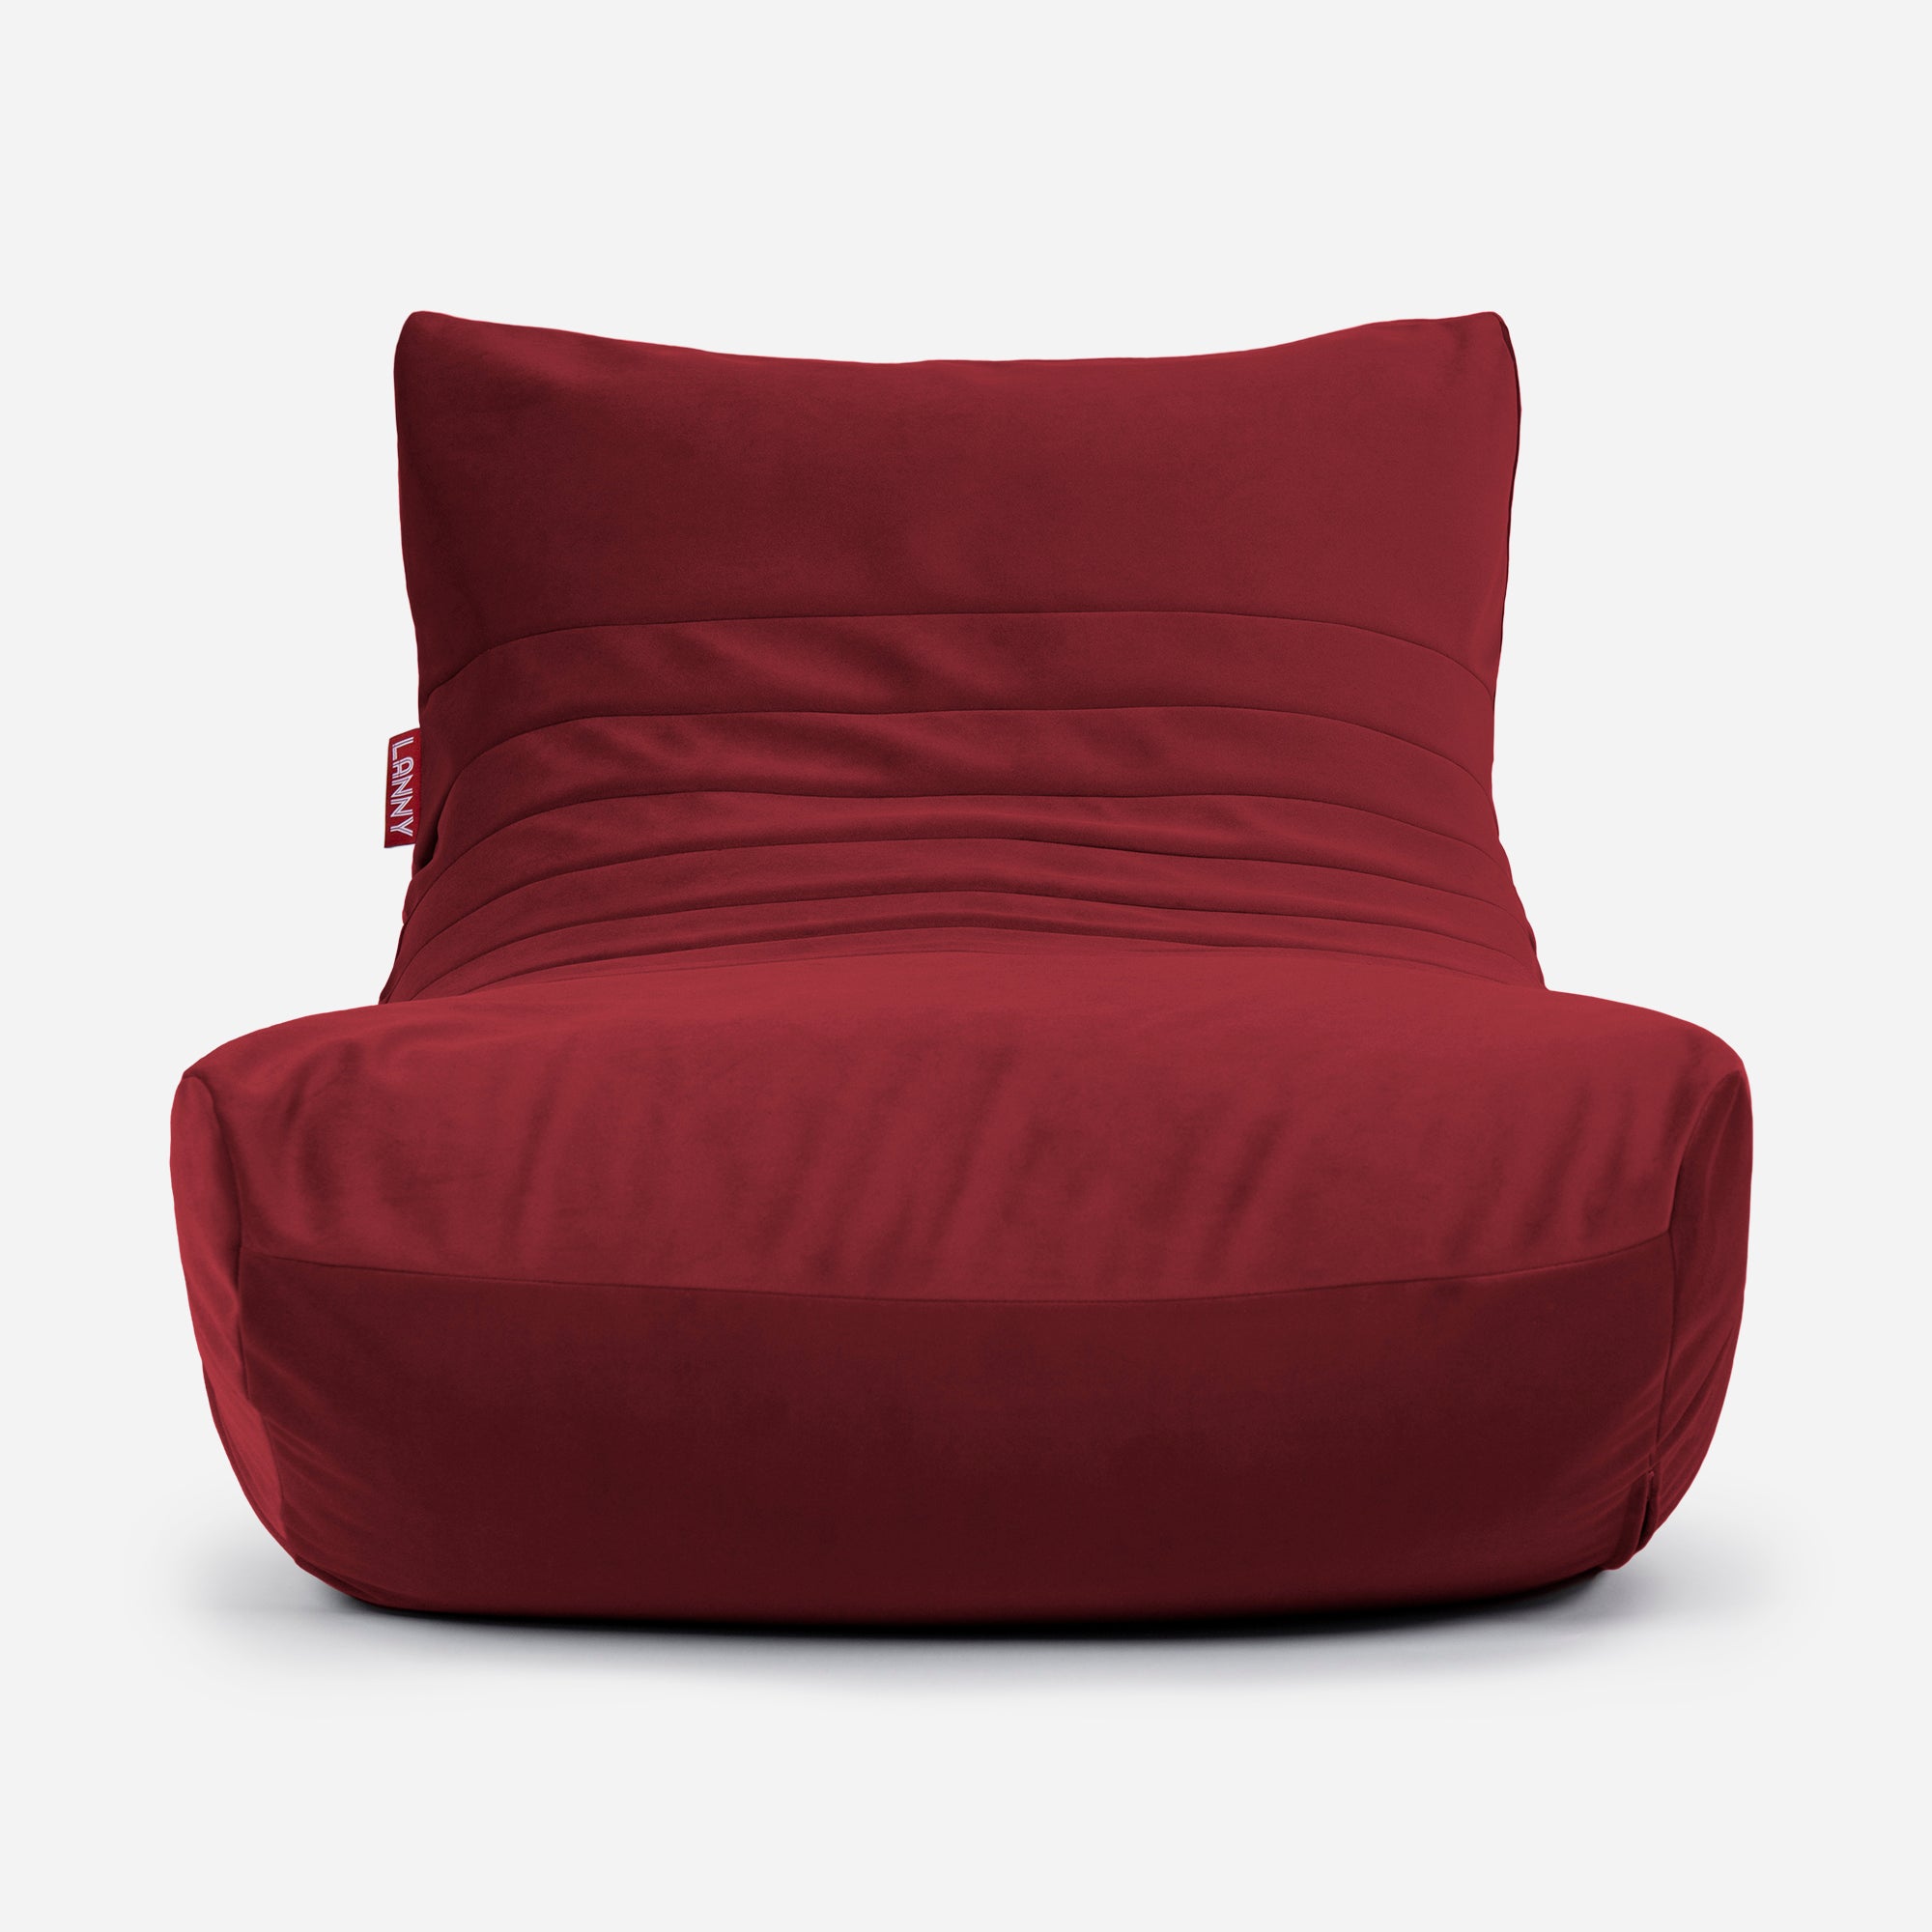 Curvy Velvet Red Bean bag Chair